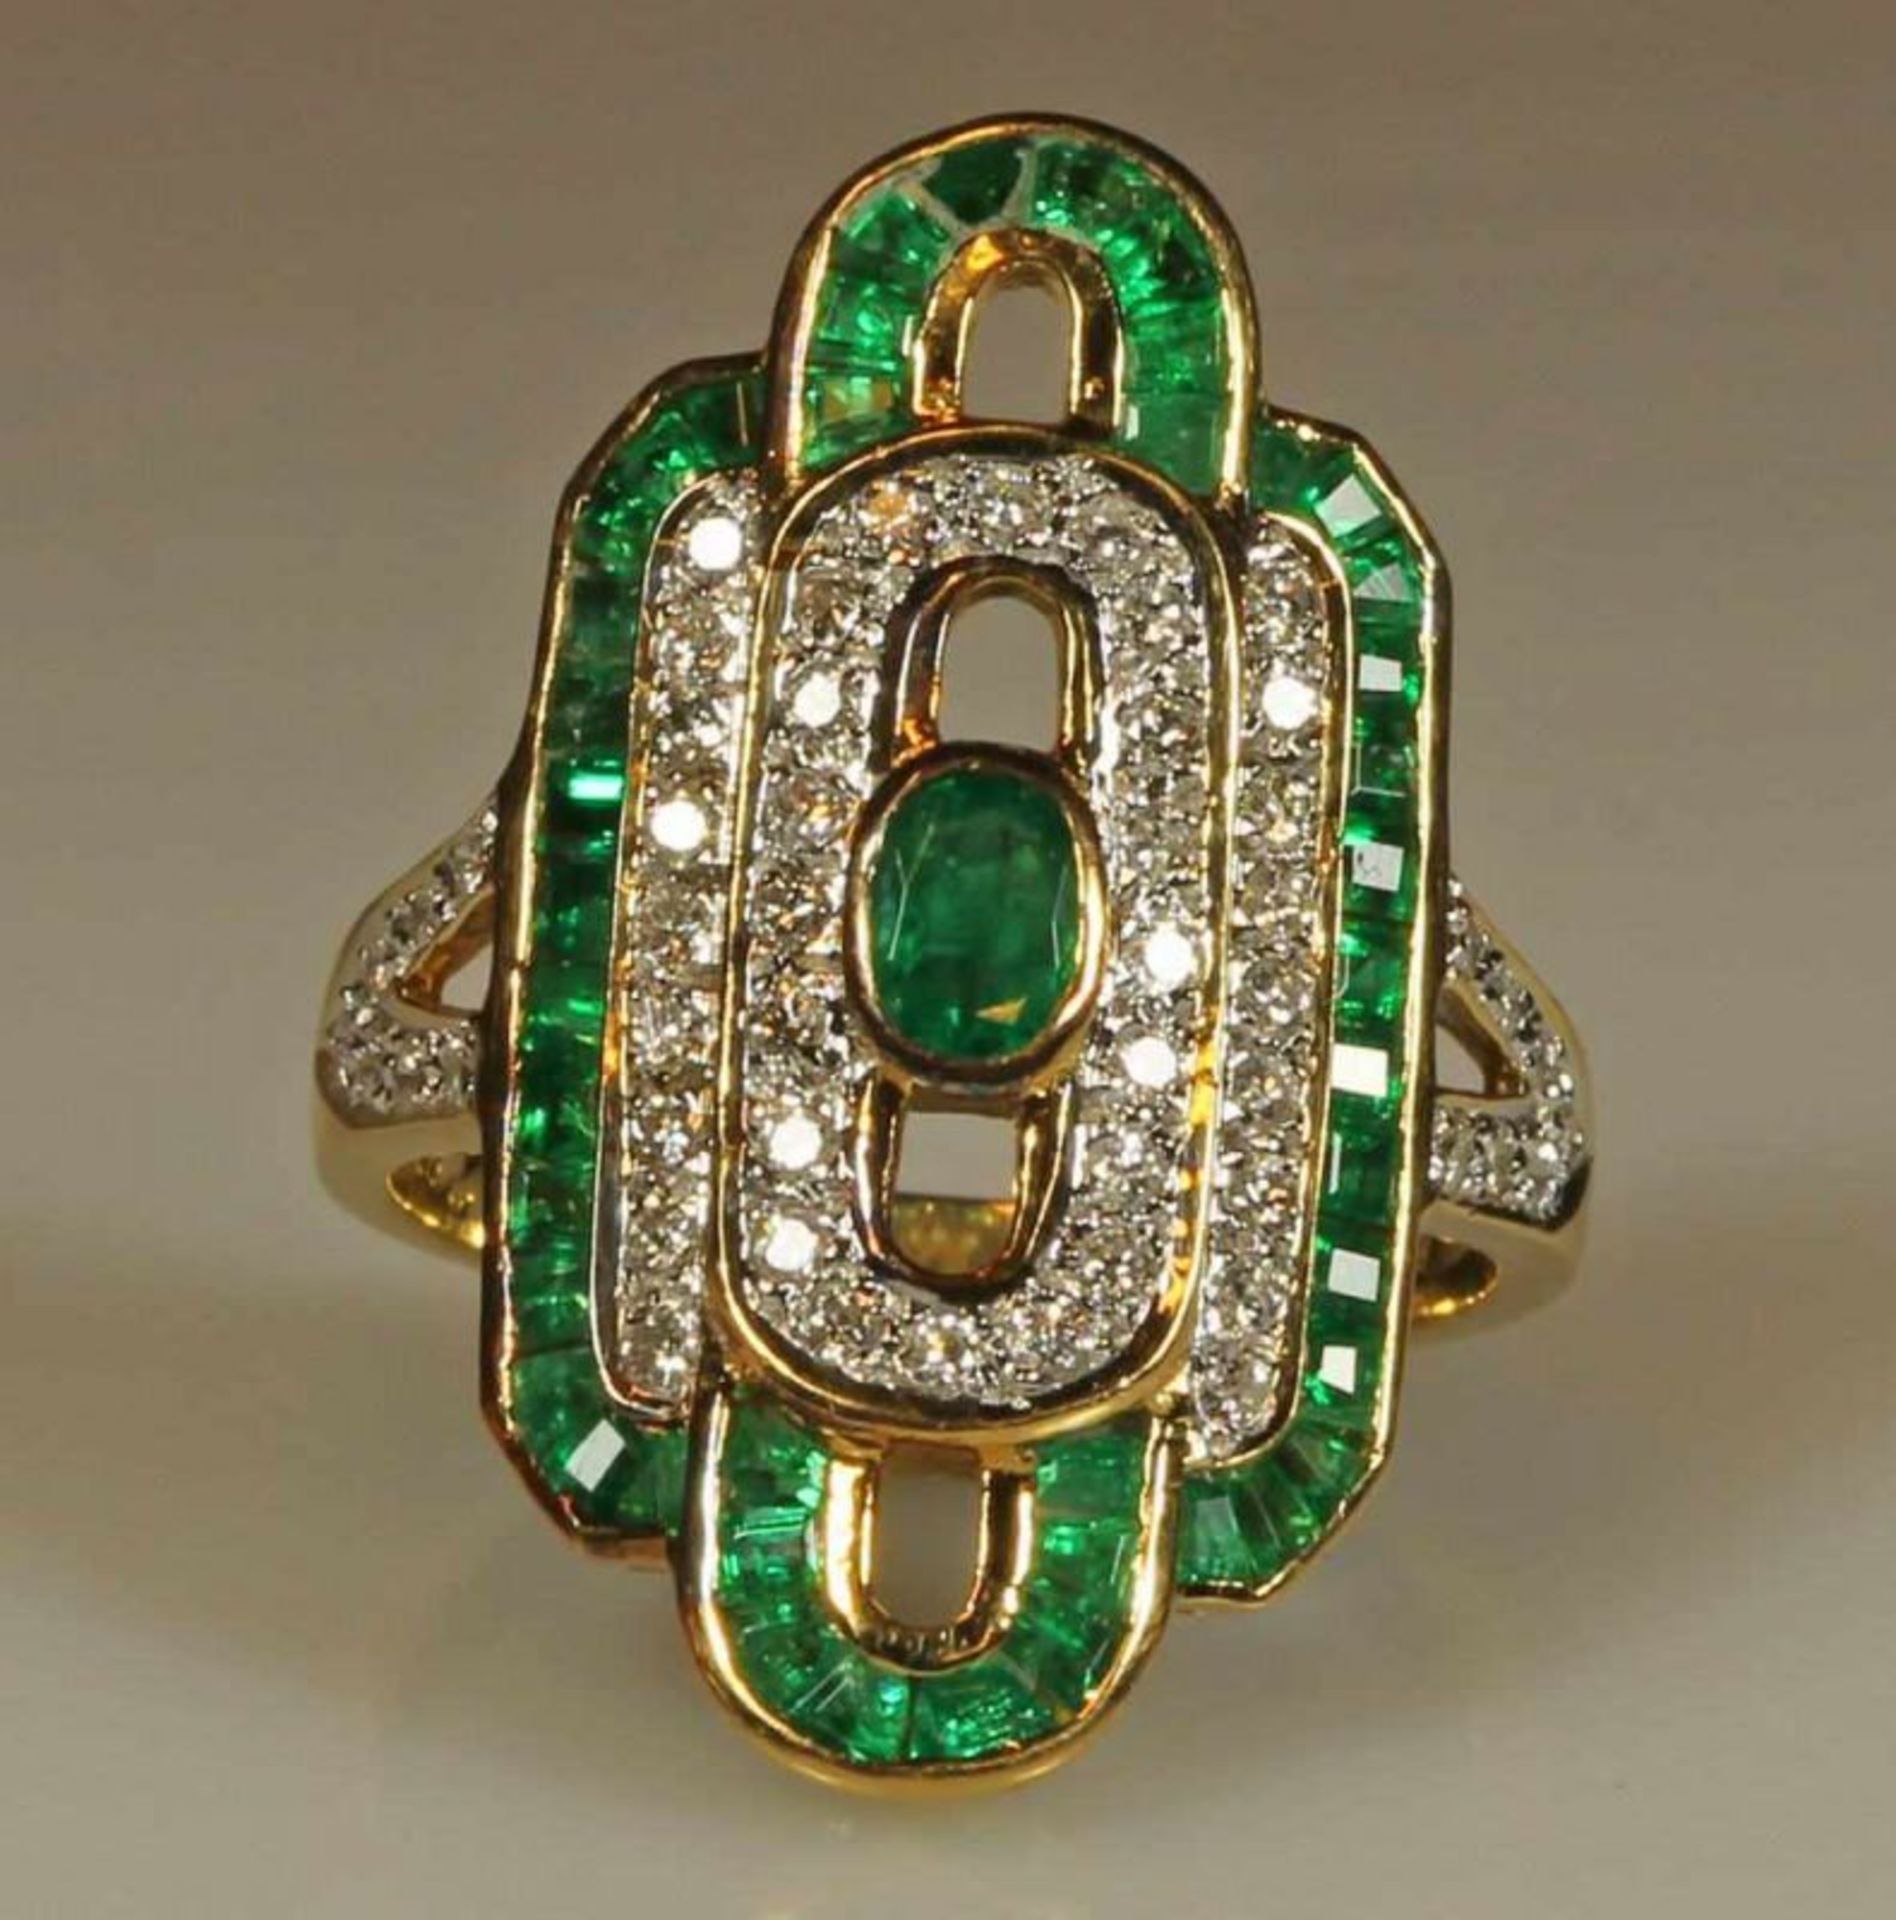 Ring, GG 750, 1 ovaler facettierter Smaragd, 44 eingeschliffene Smaragd-Trapeze, 52 Brillanten